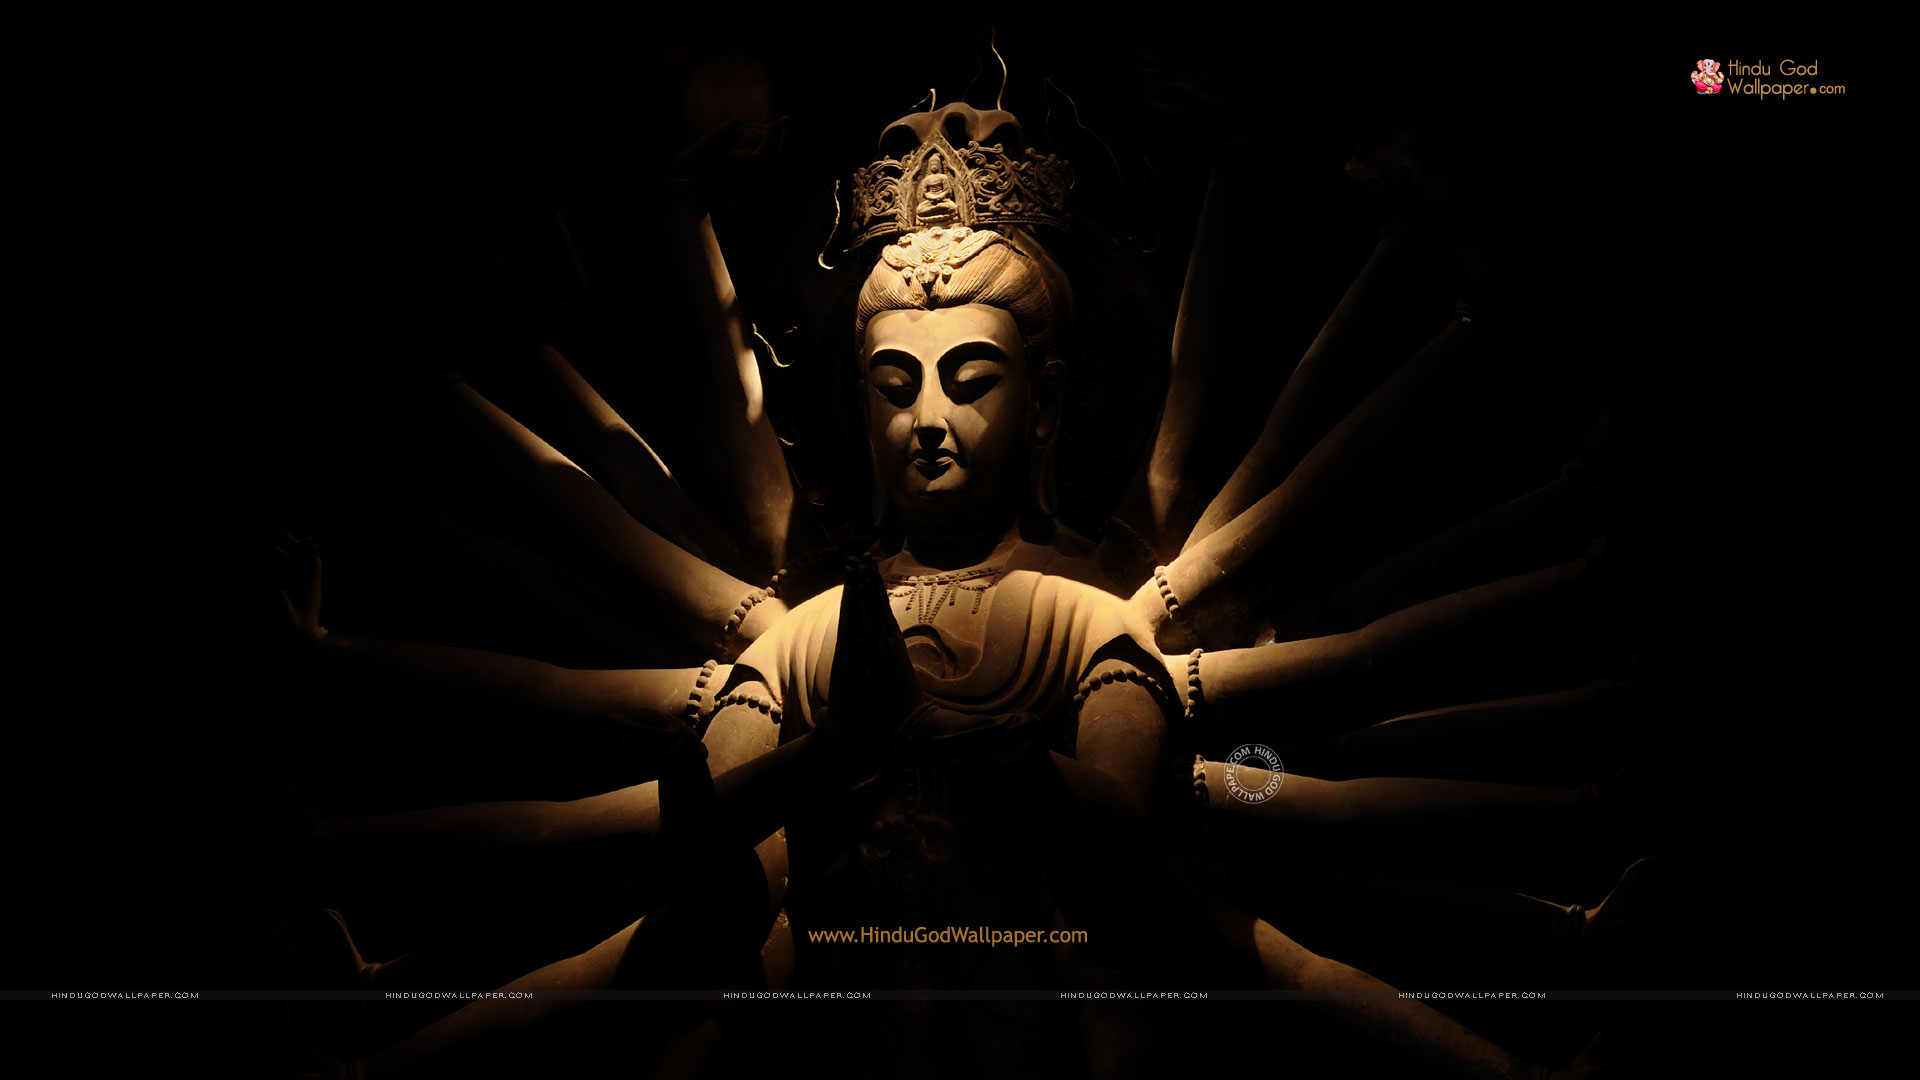 Buddha Wallpaper HD 1080p Full Size Widescreen